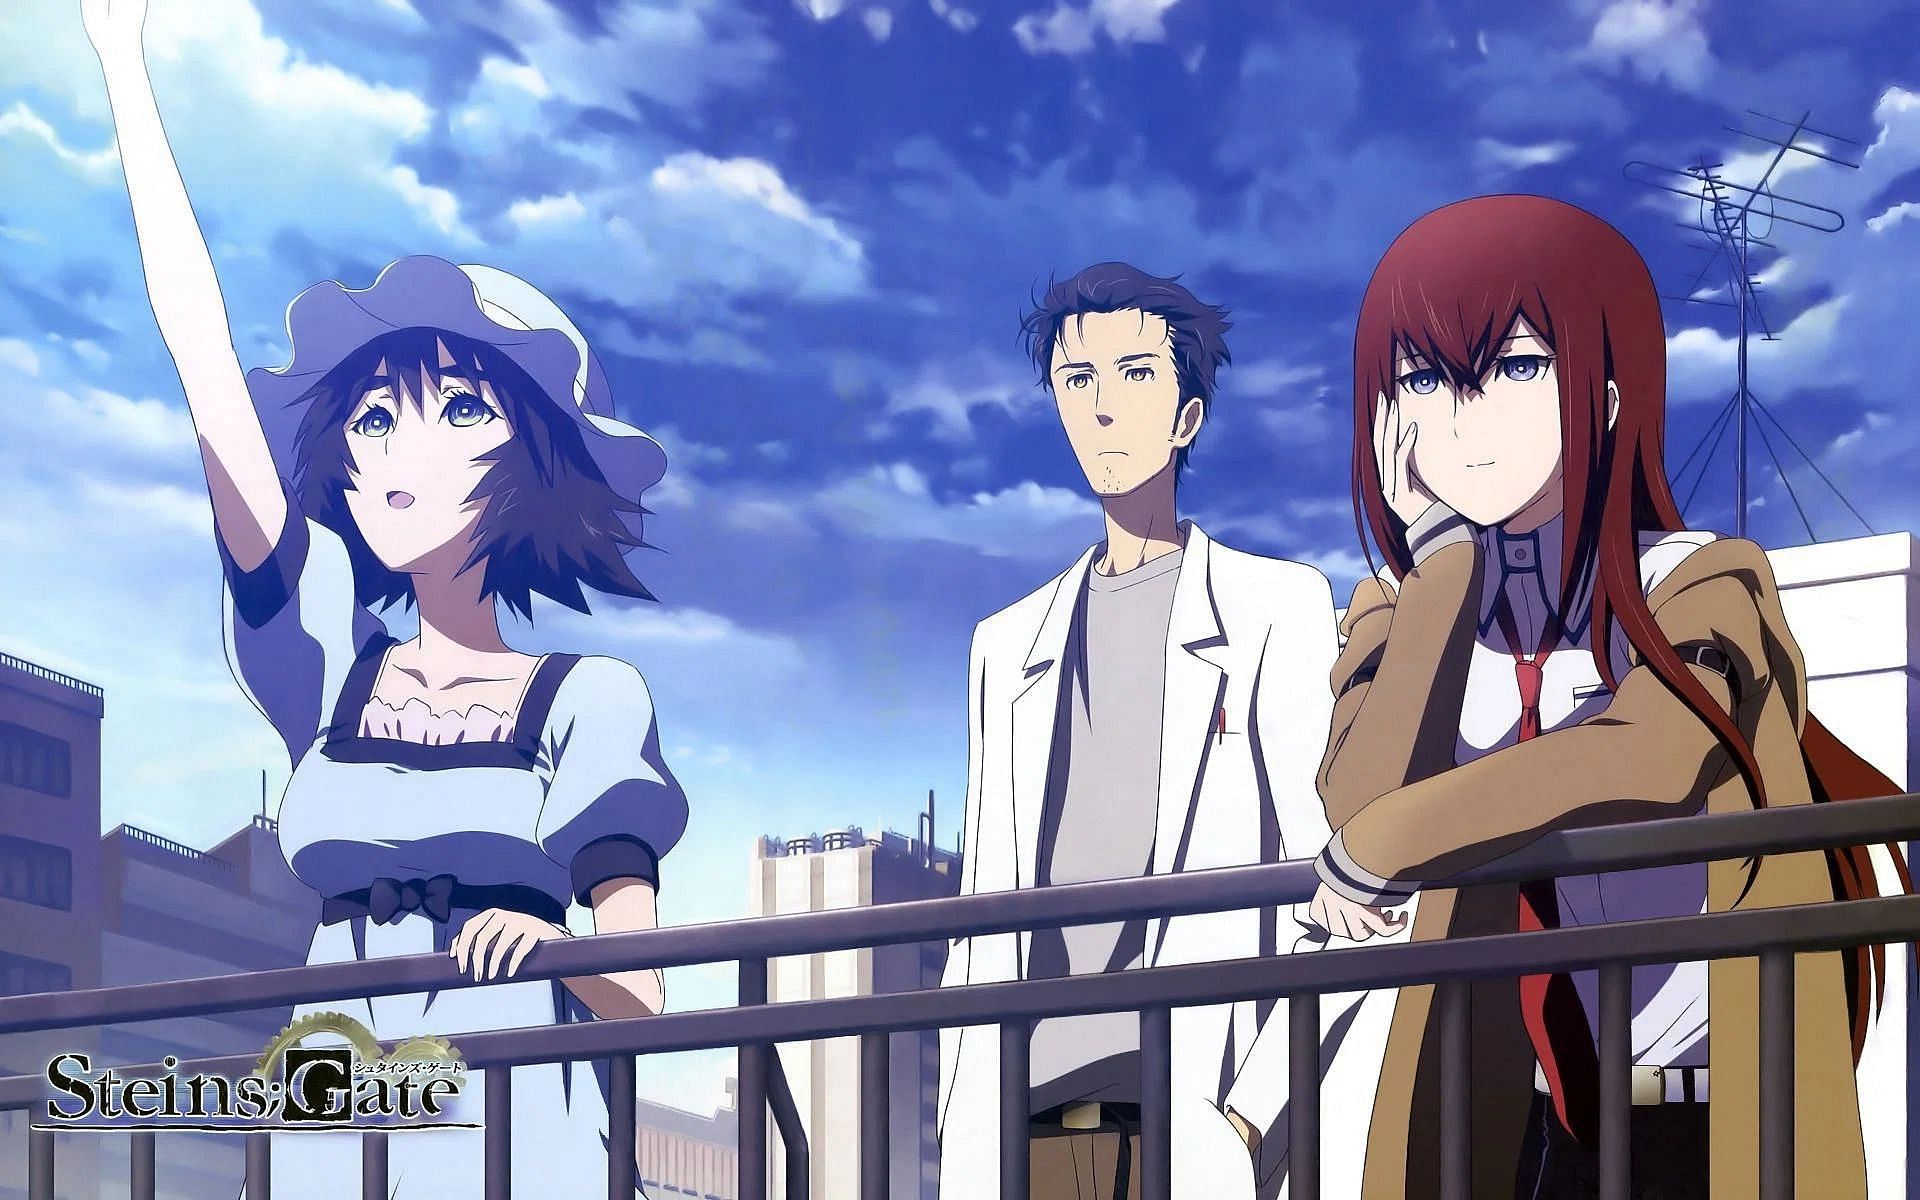 Mayuri, Rintarou, and Kurisu as seen in the 2011 series Steins;Gate (Image via White Fox)